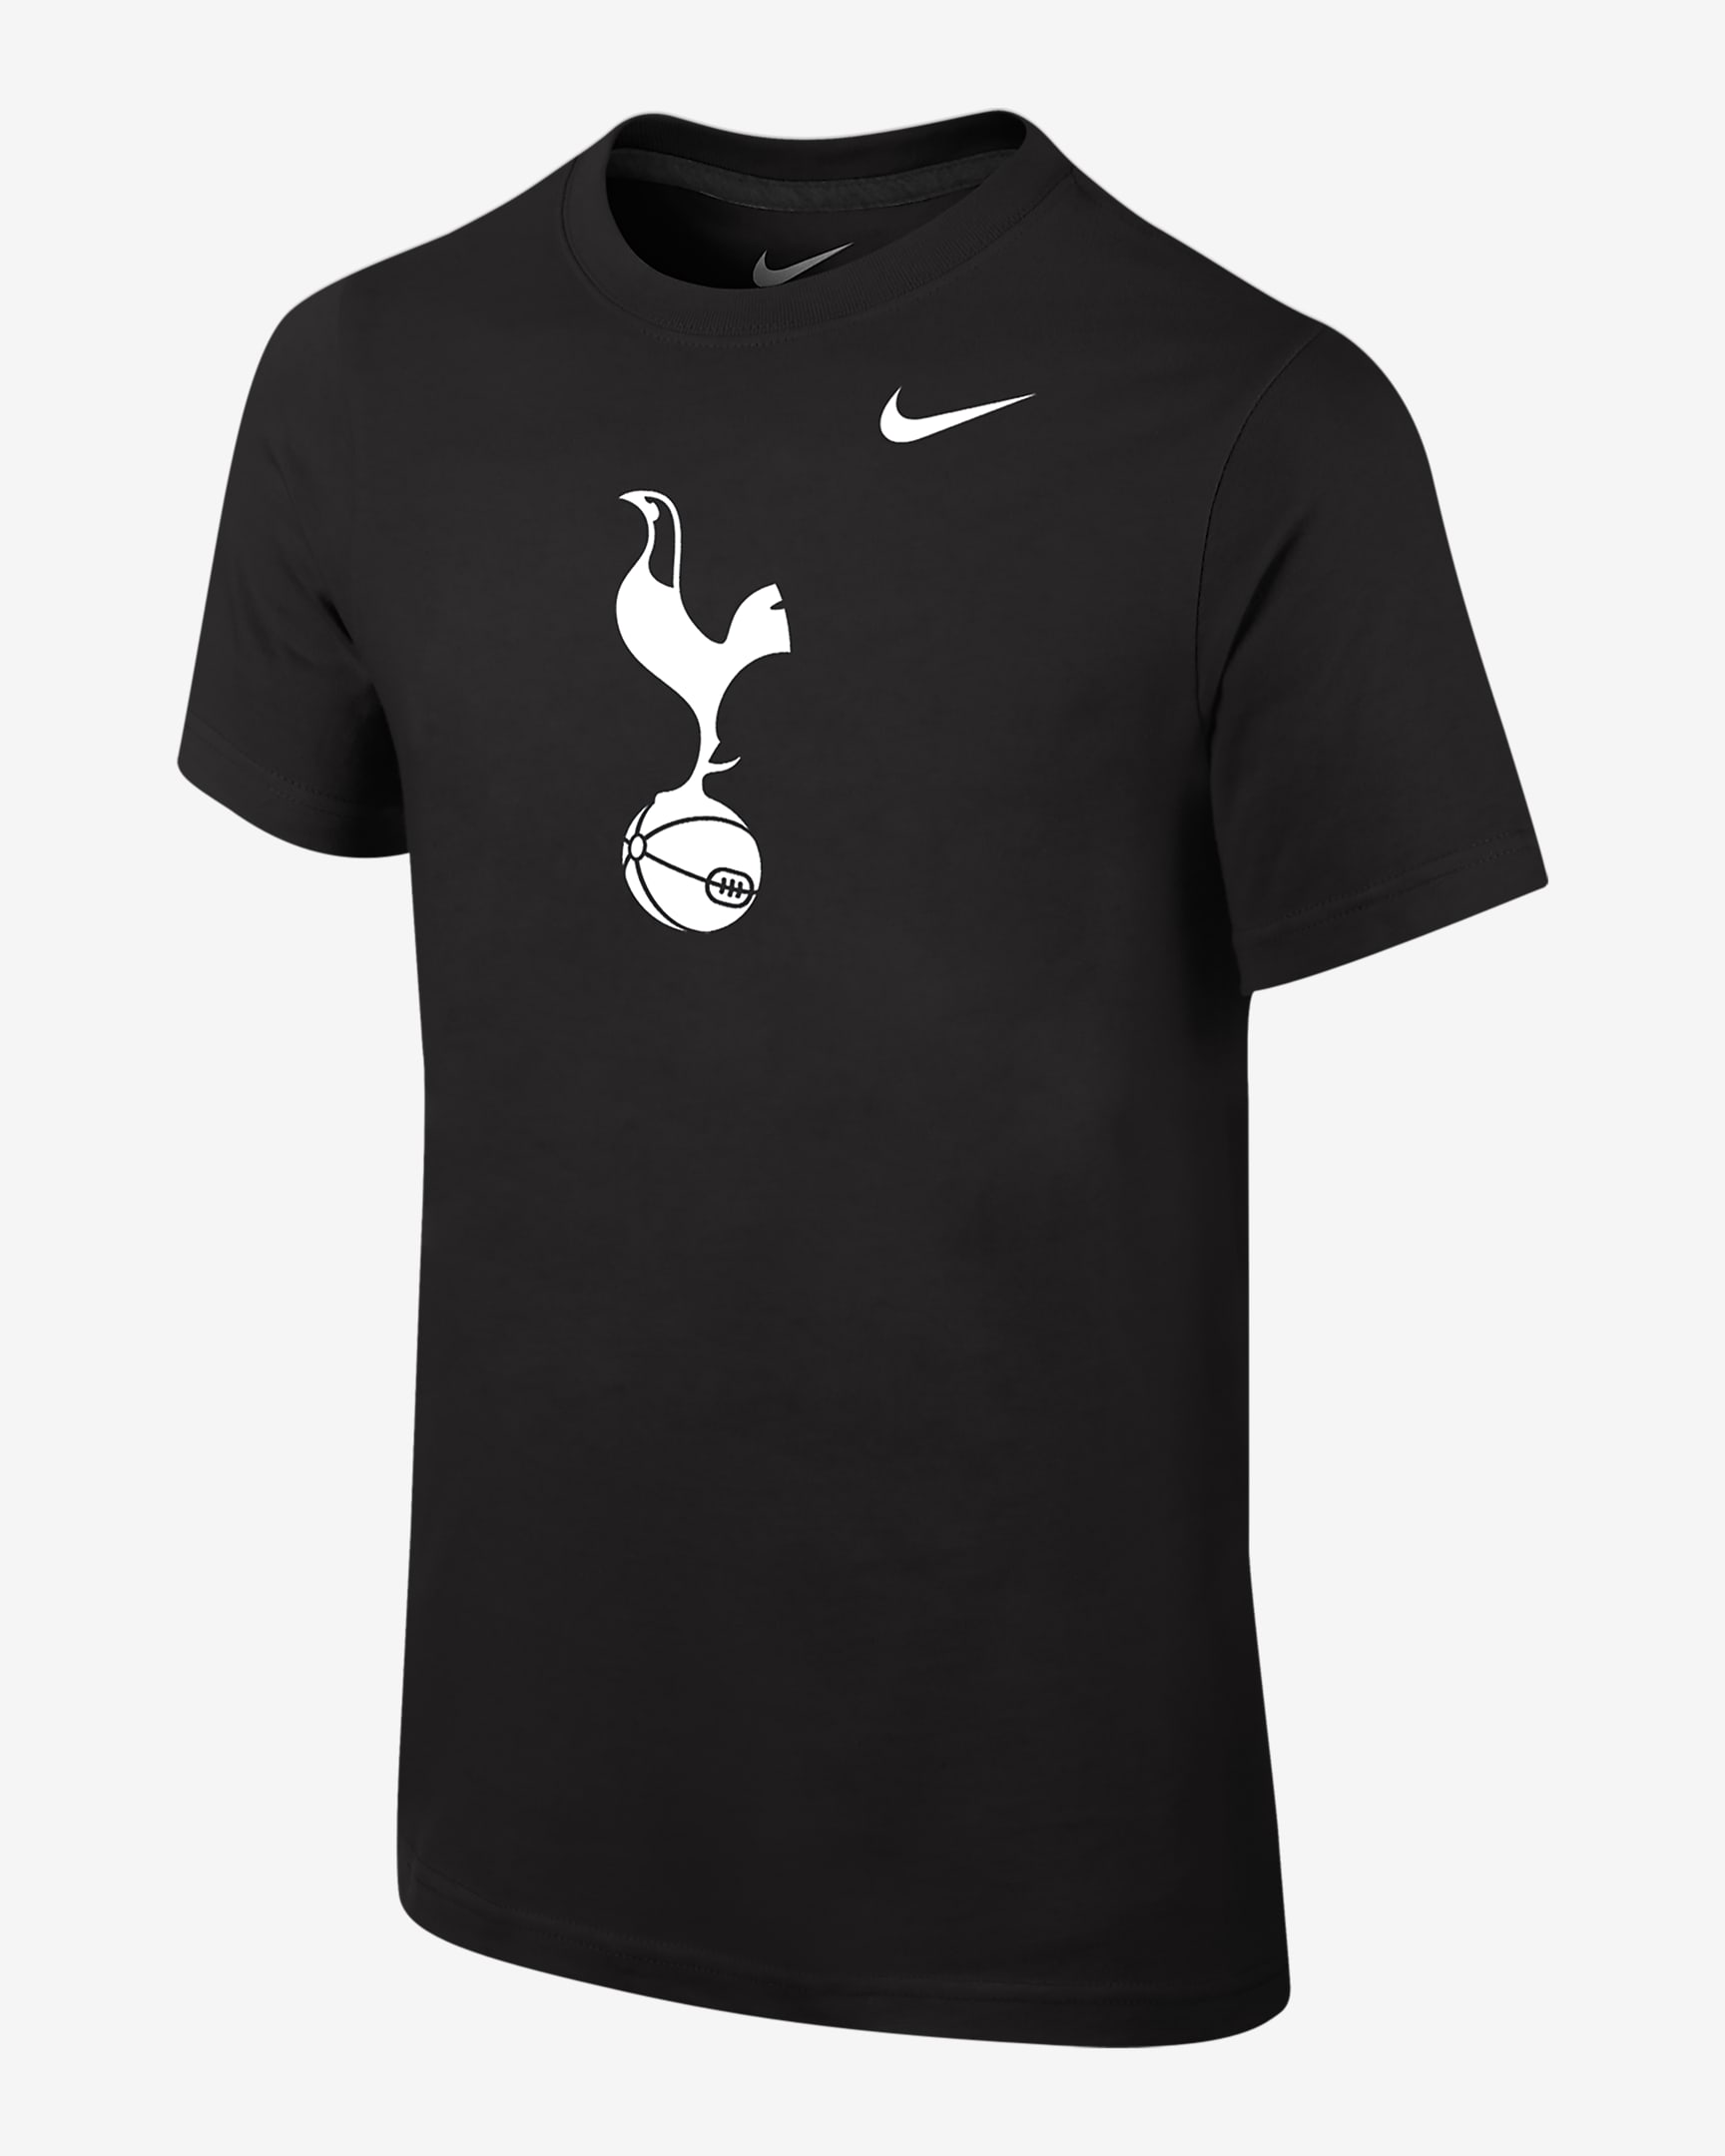 Tottenham Big Kids' T-Shirt. Nike.com